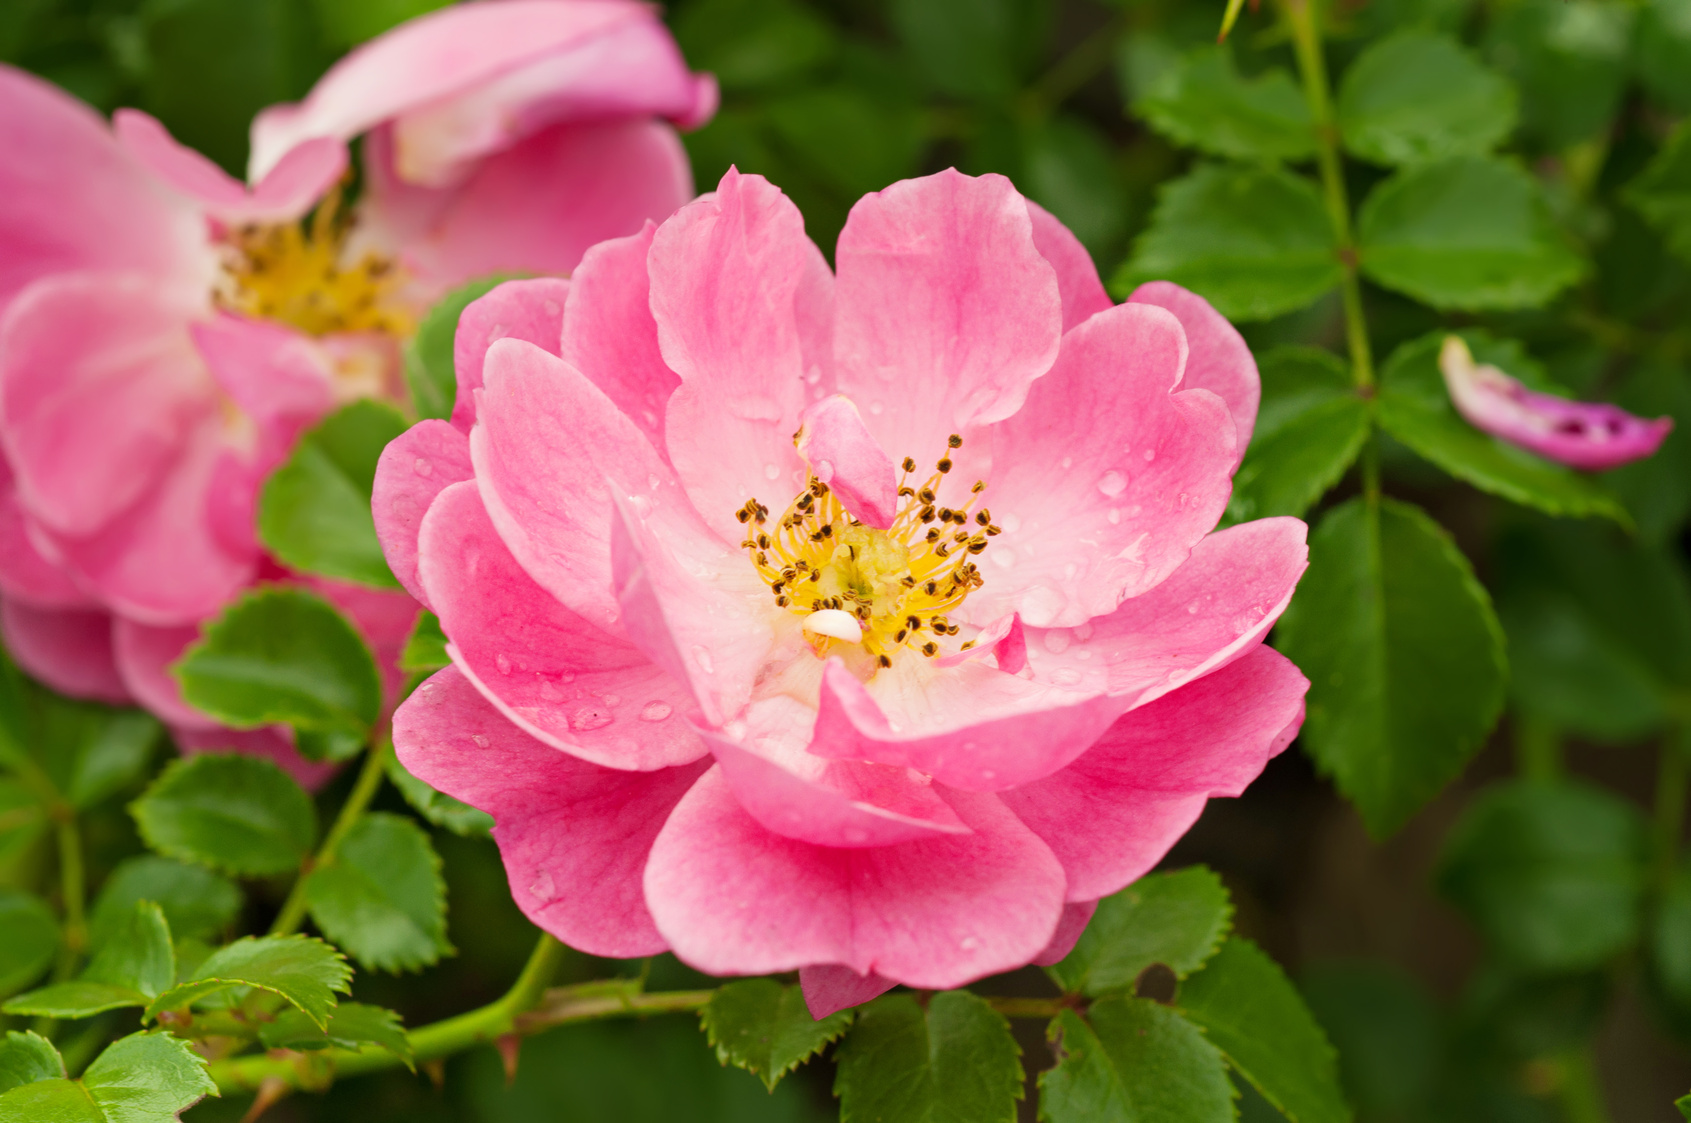 Flowers of dog-rose